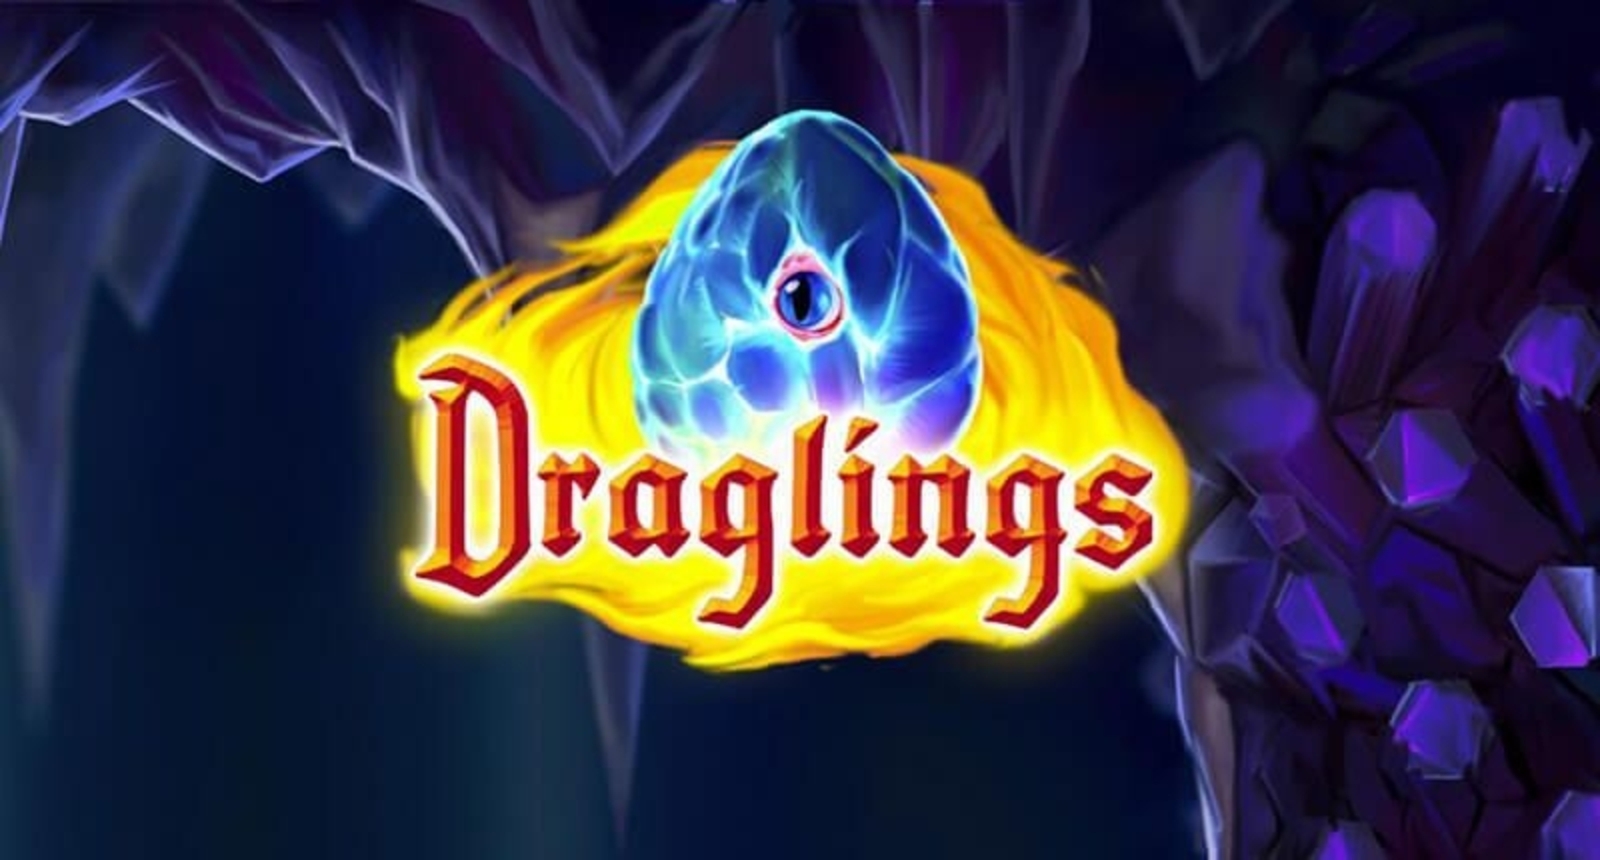 Draglings demo